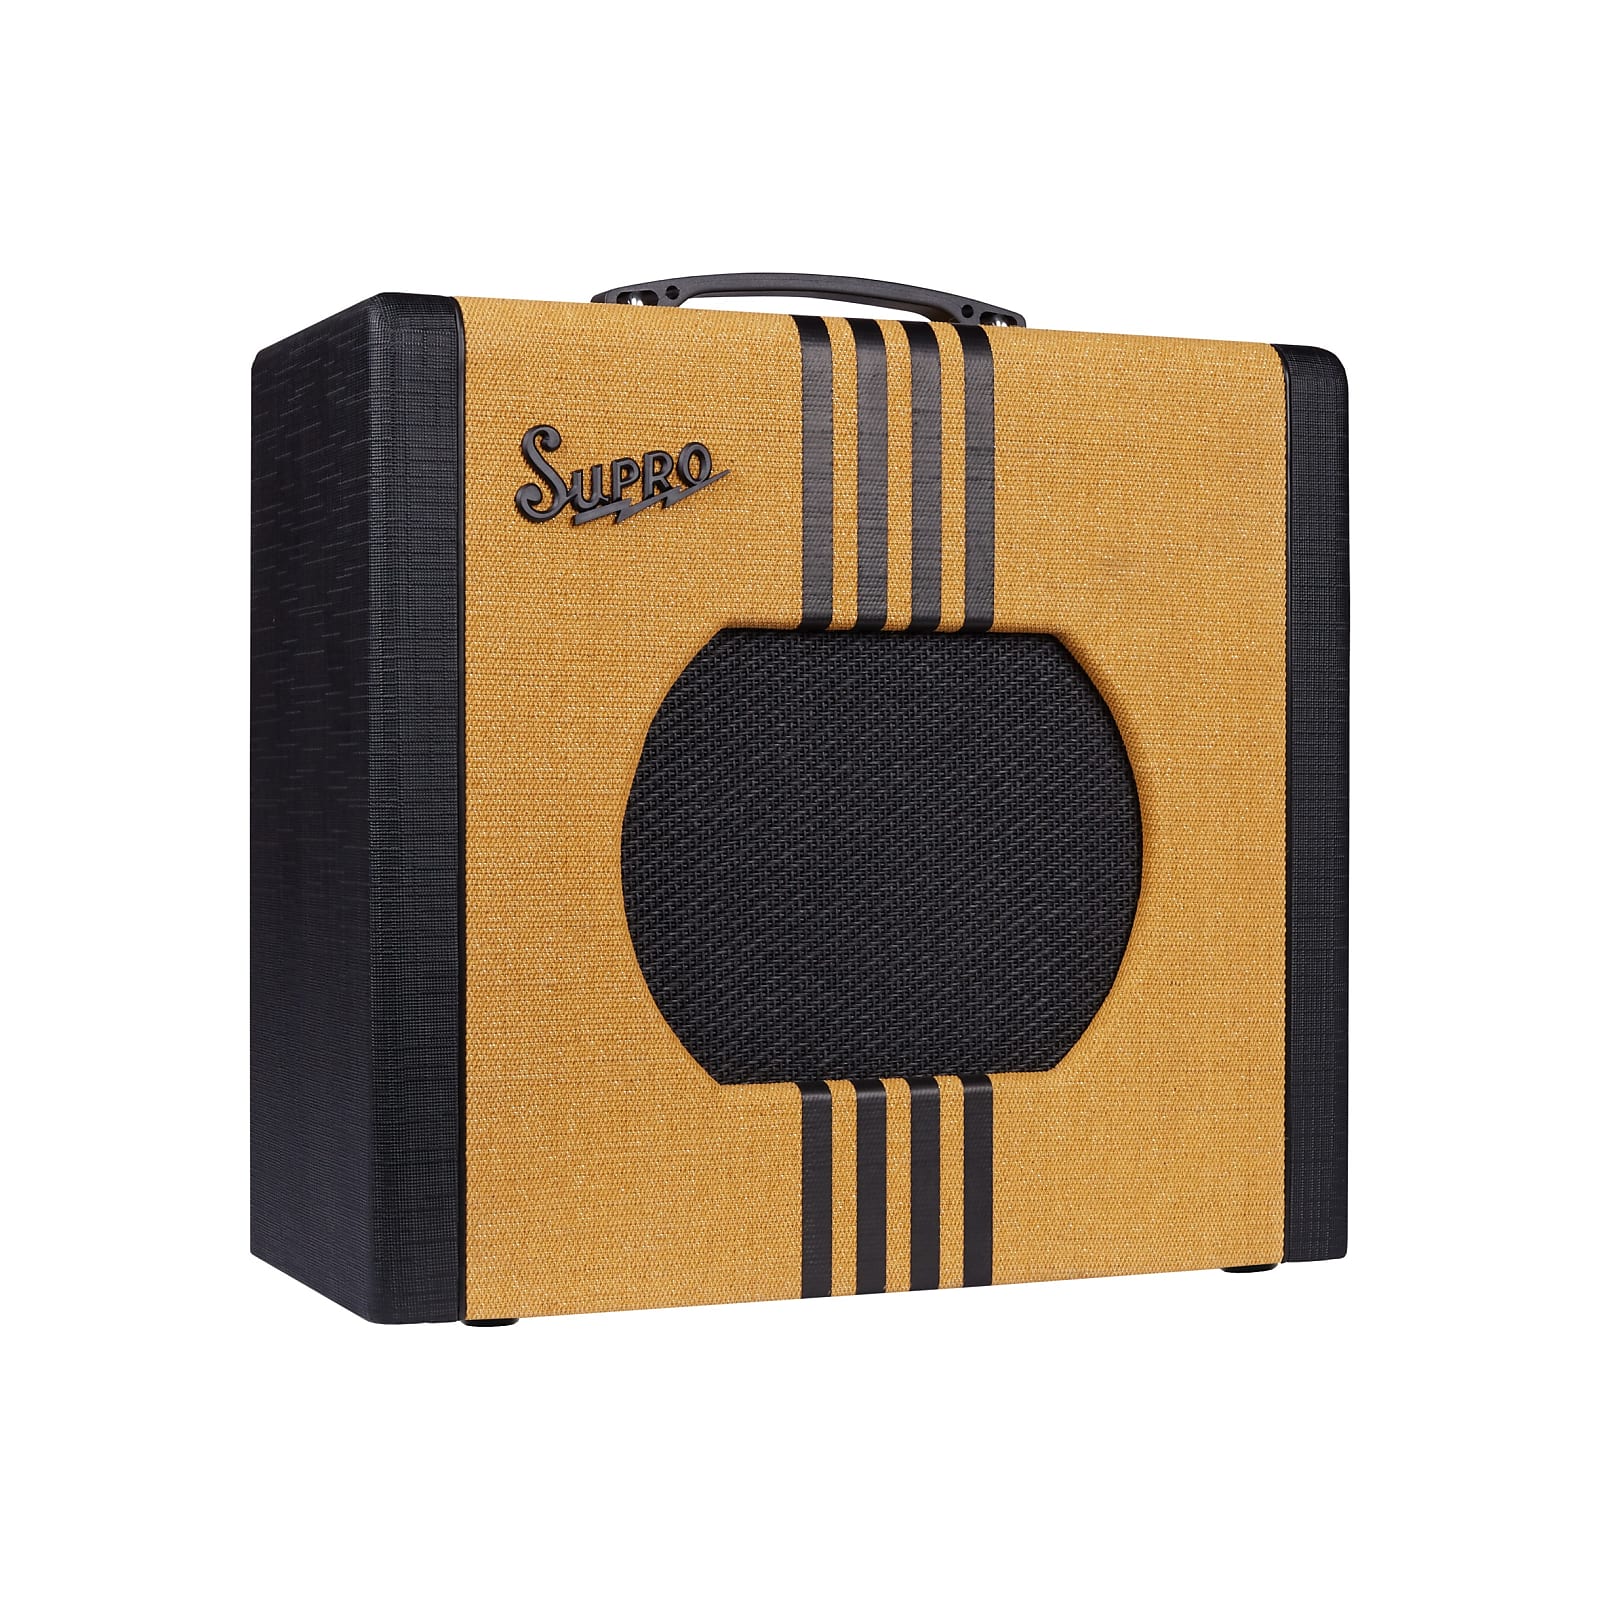 Supro 1820RTB Delta King 10 5W 1x10'' Guitar Tube Combo Amplifier Tweed & Black